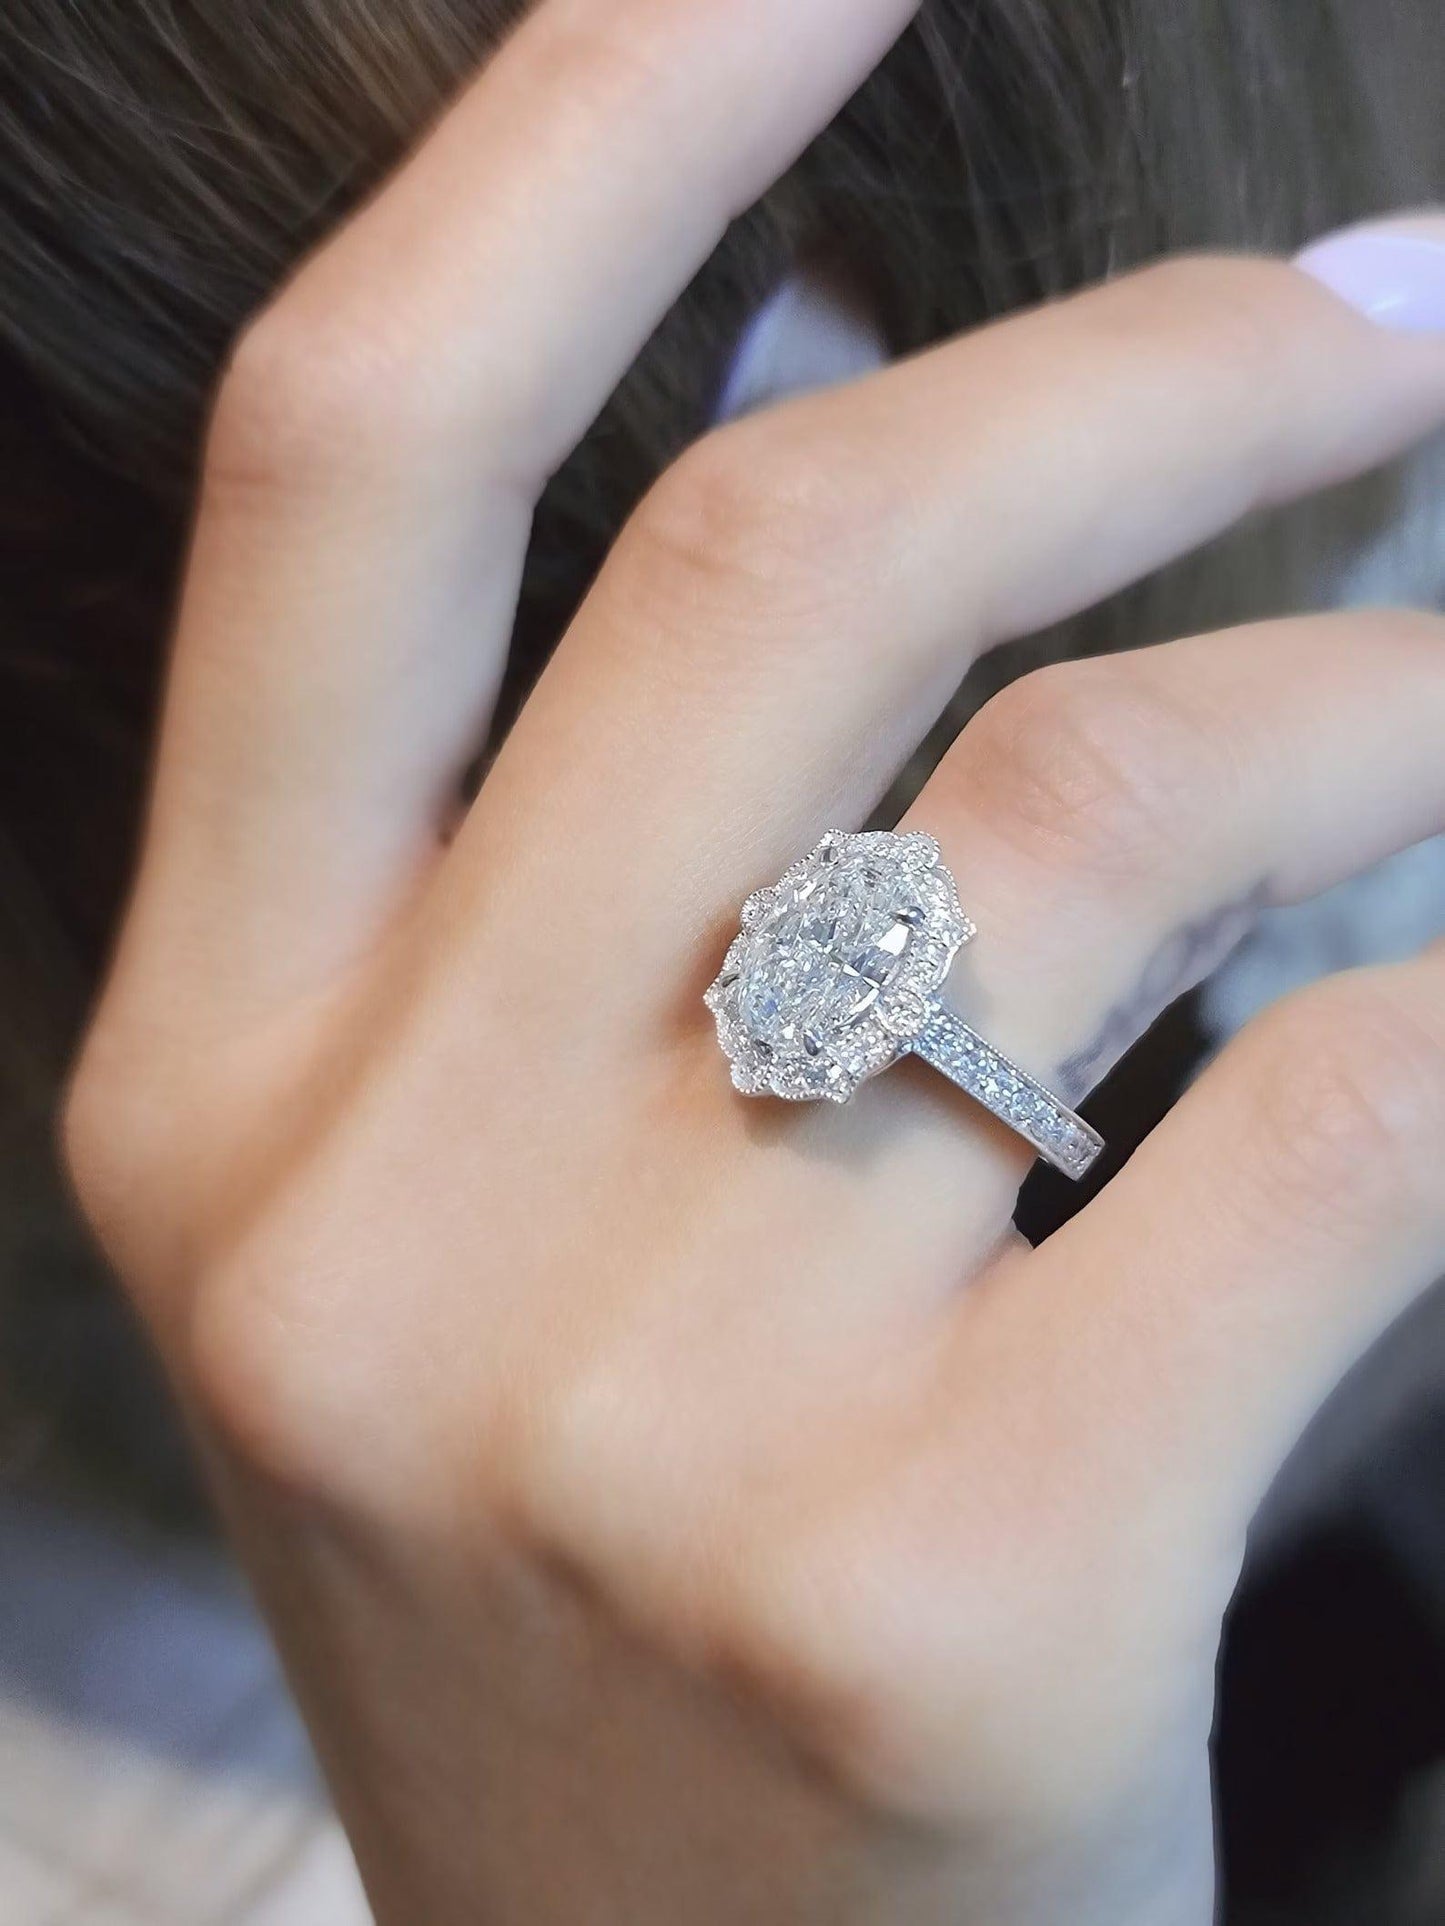 2Ct Halo Oval Shaped Vintage inspired Moissanite Diamond Engagement Ring - JBR Jeweler